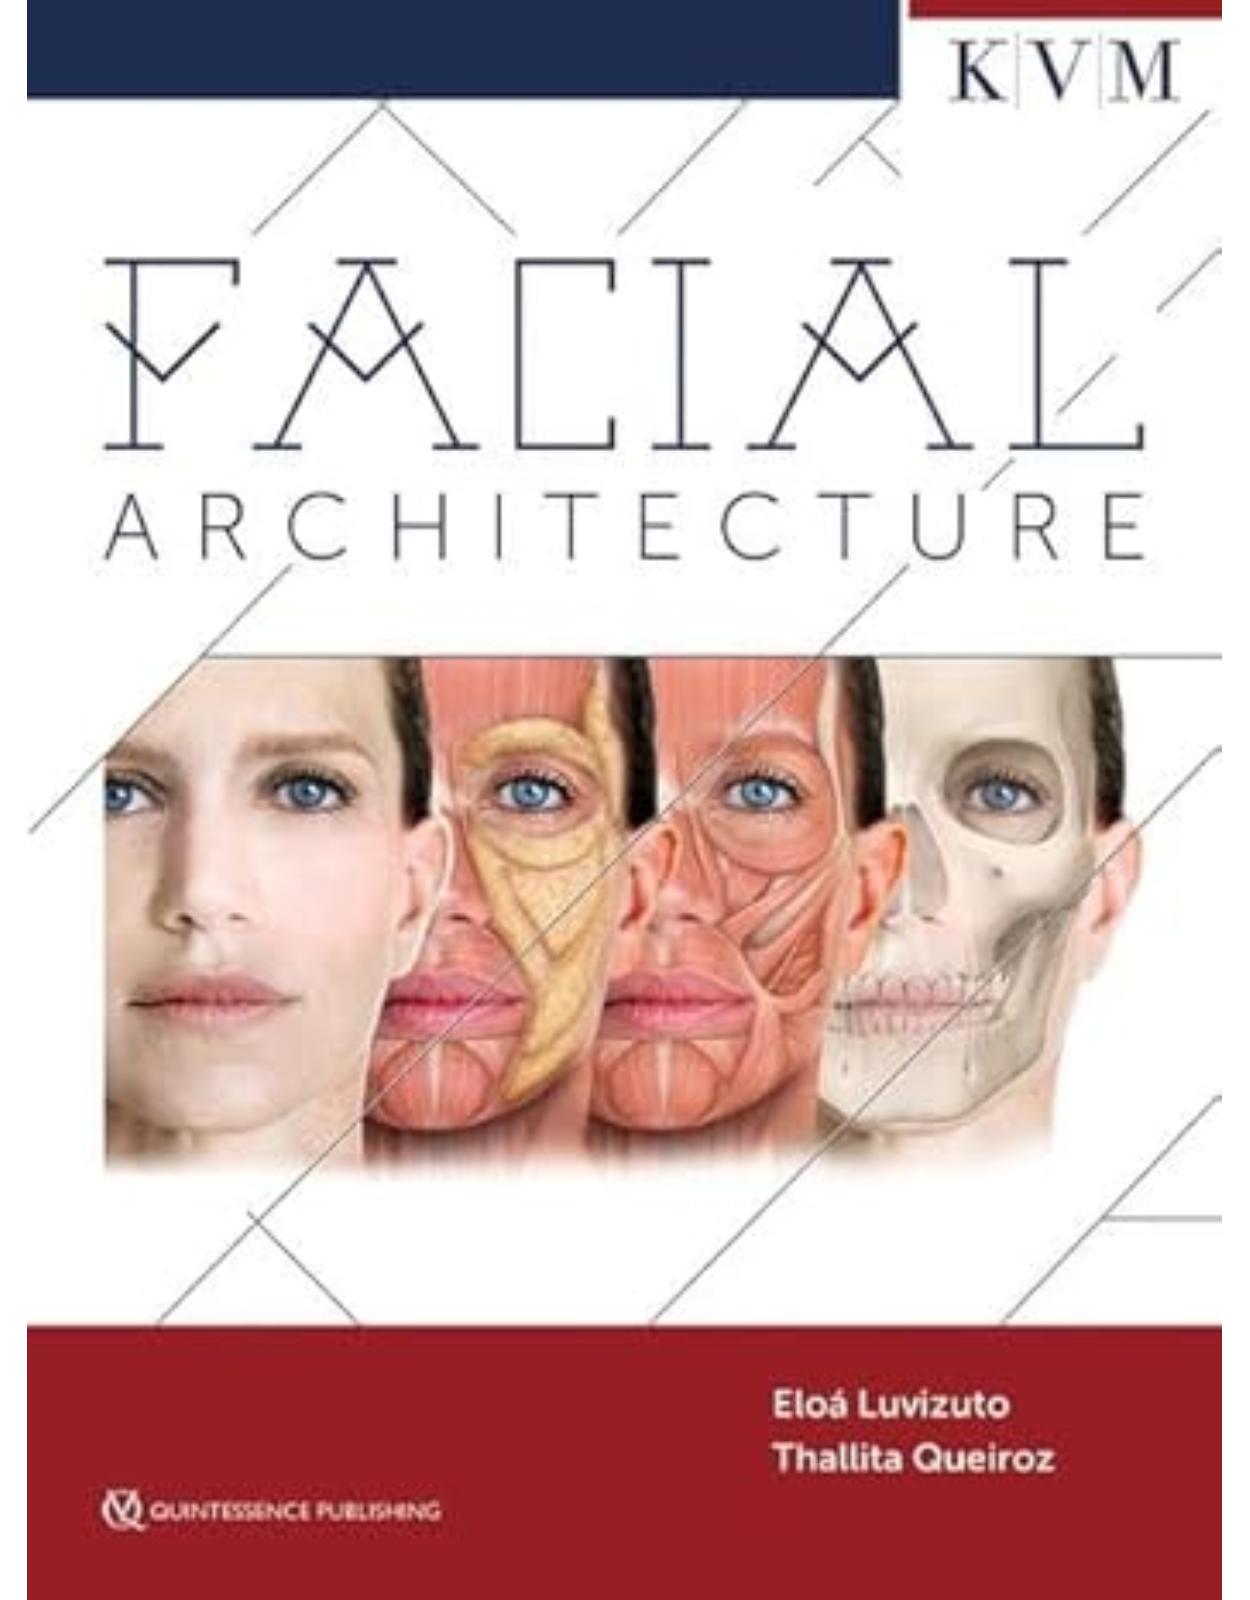 Facial Architecture